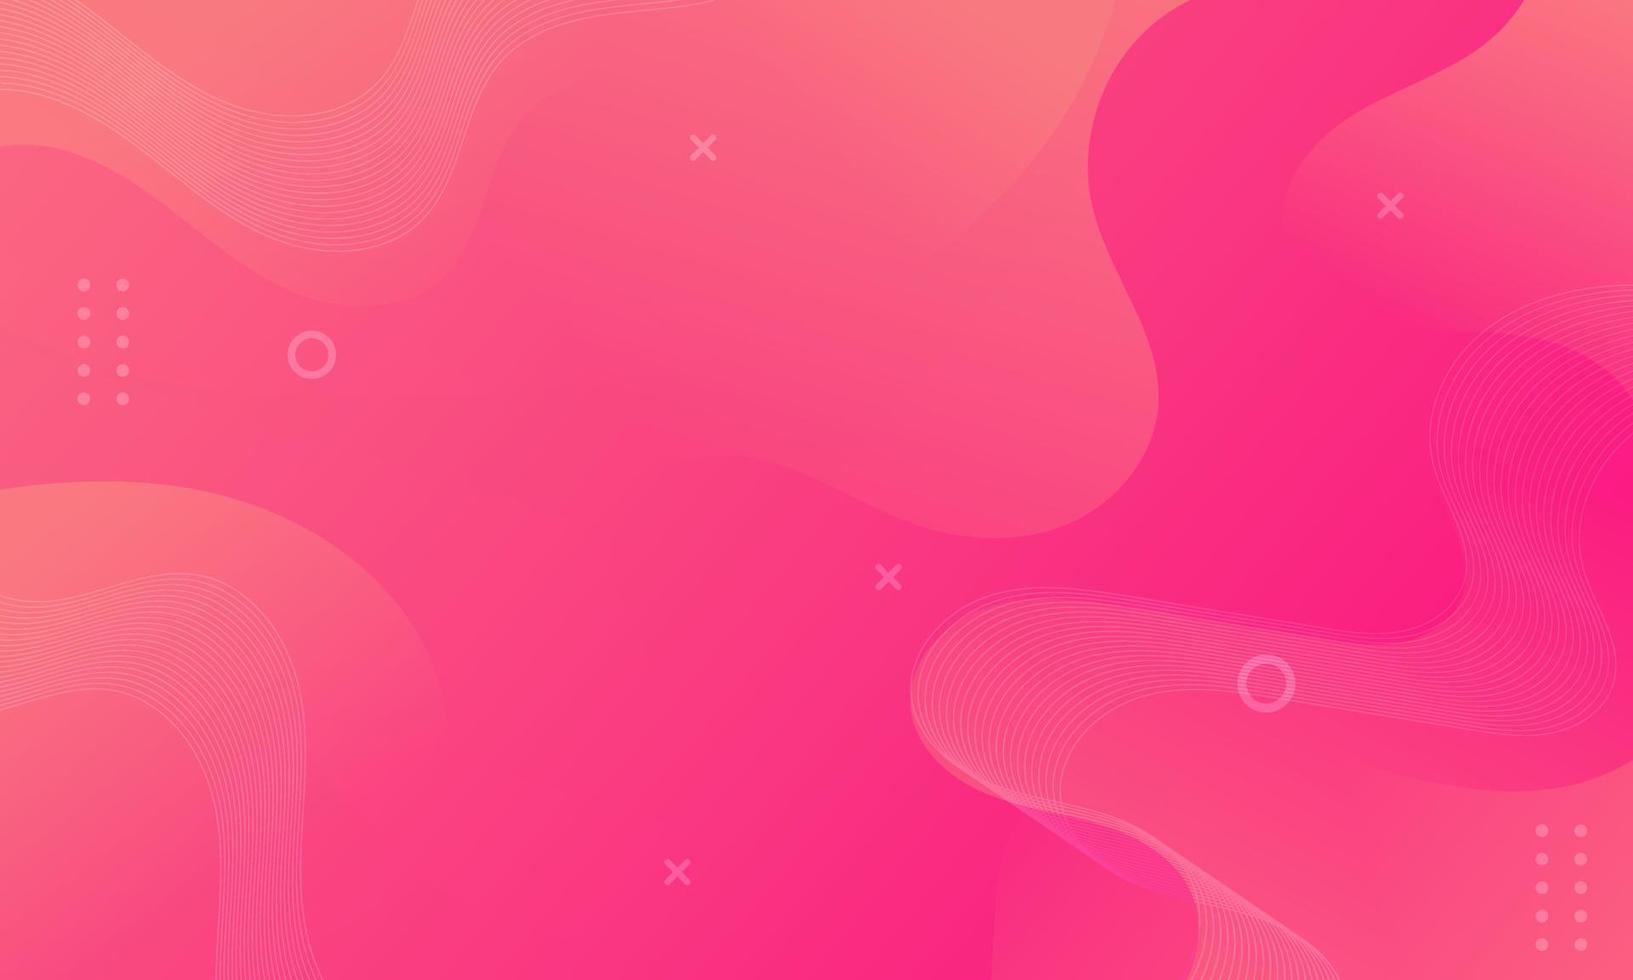 fondo de onda de fluido rosa abstracto vector